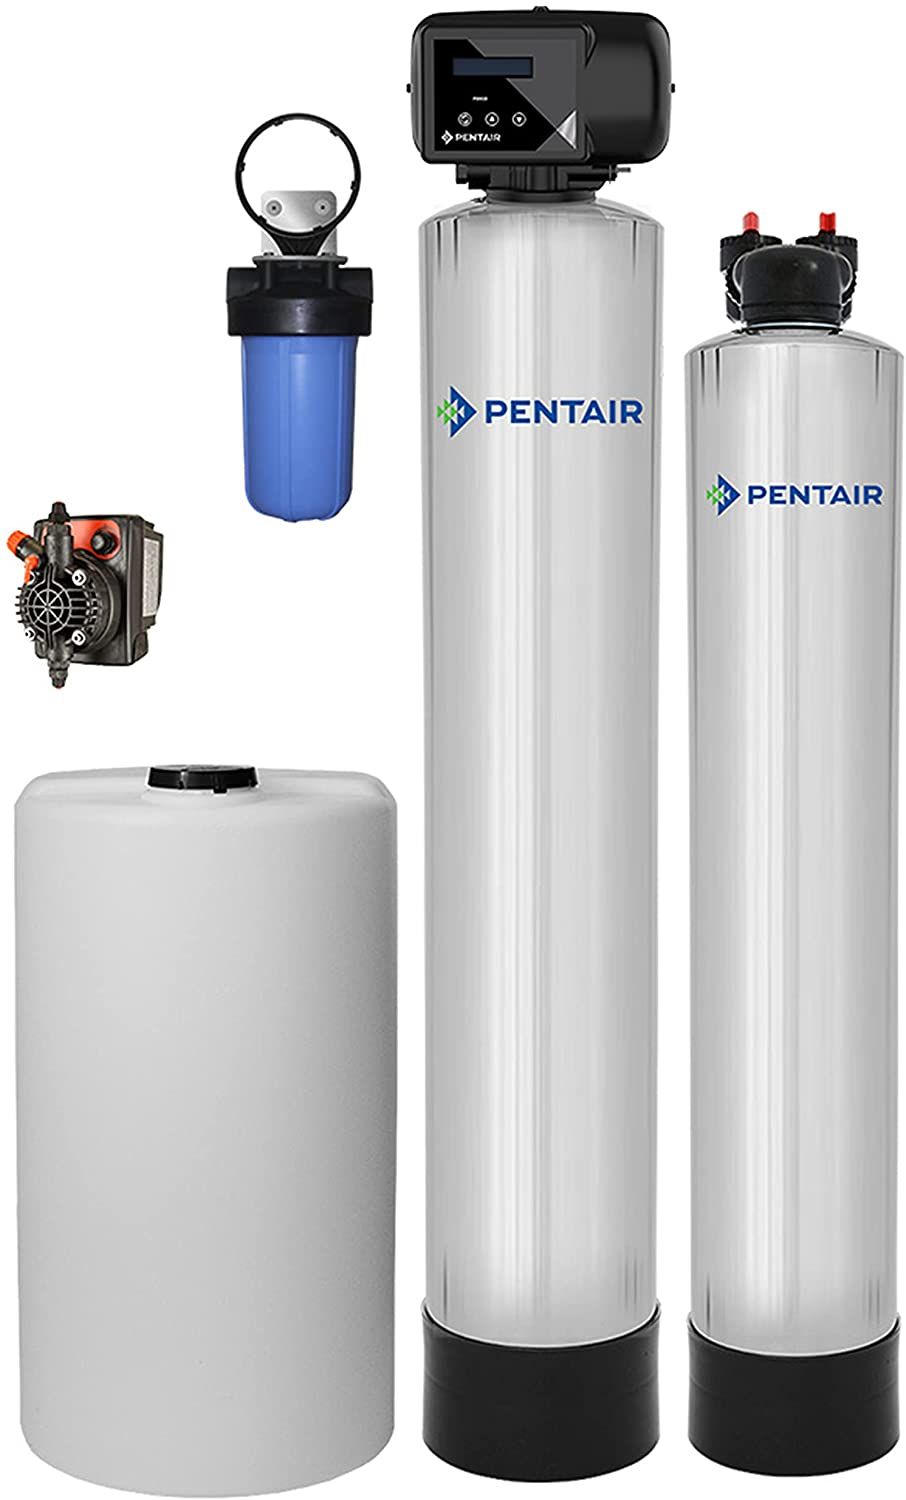 Pentair pelican wf4 p iron & manganese filter system combo